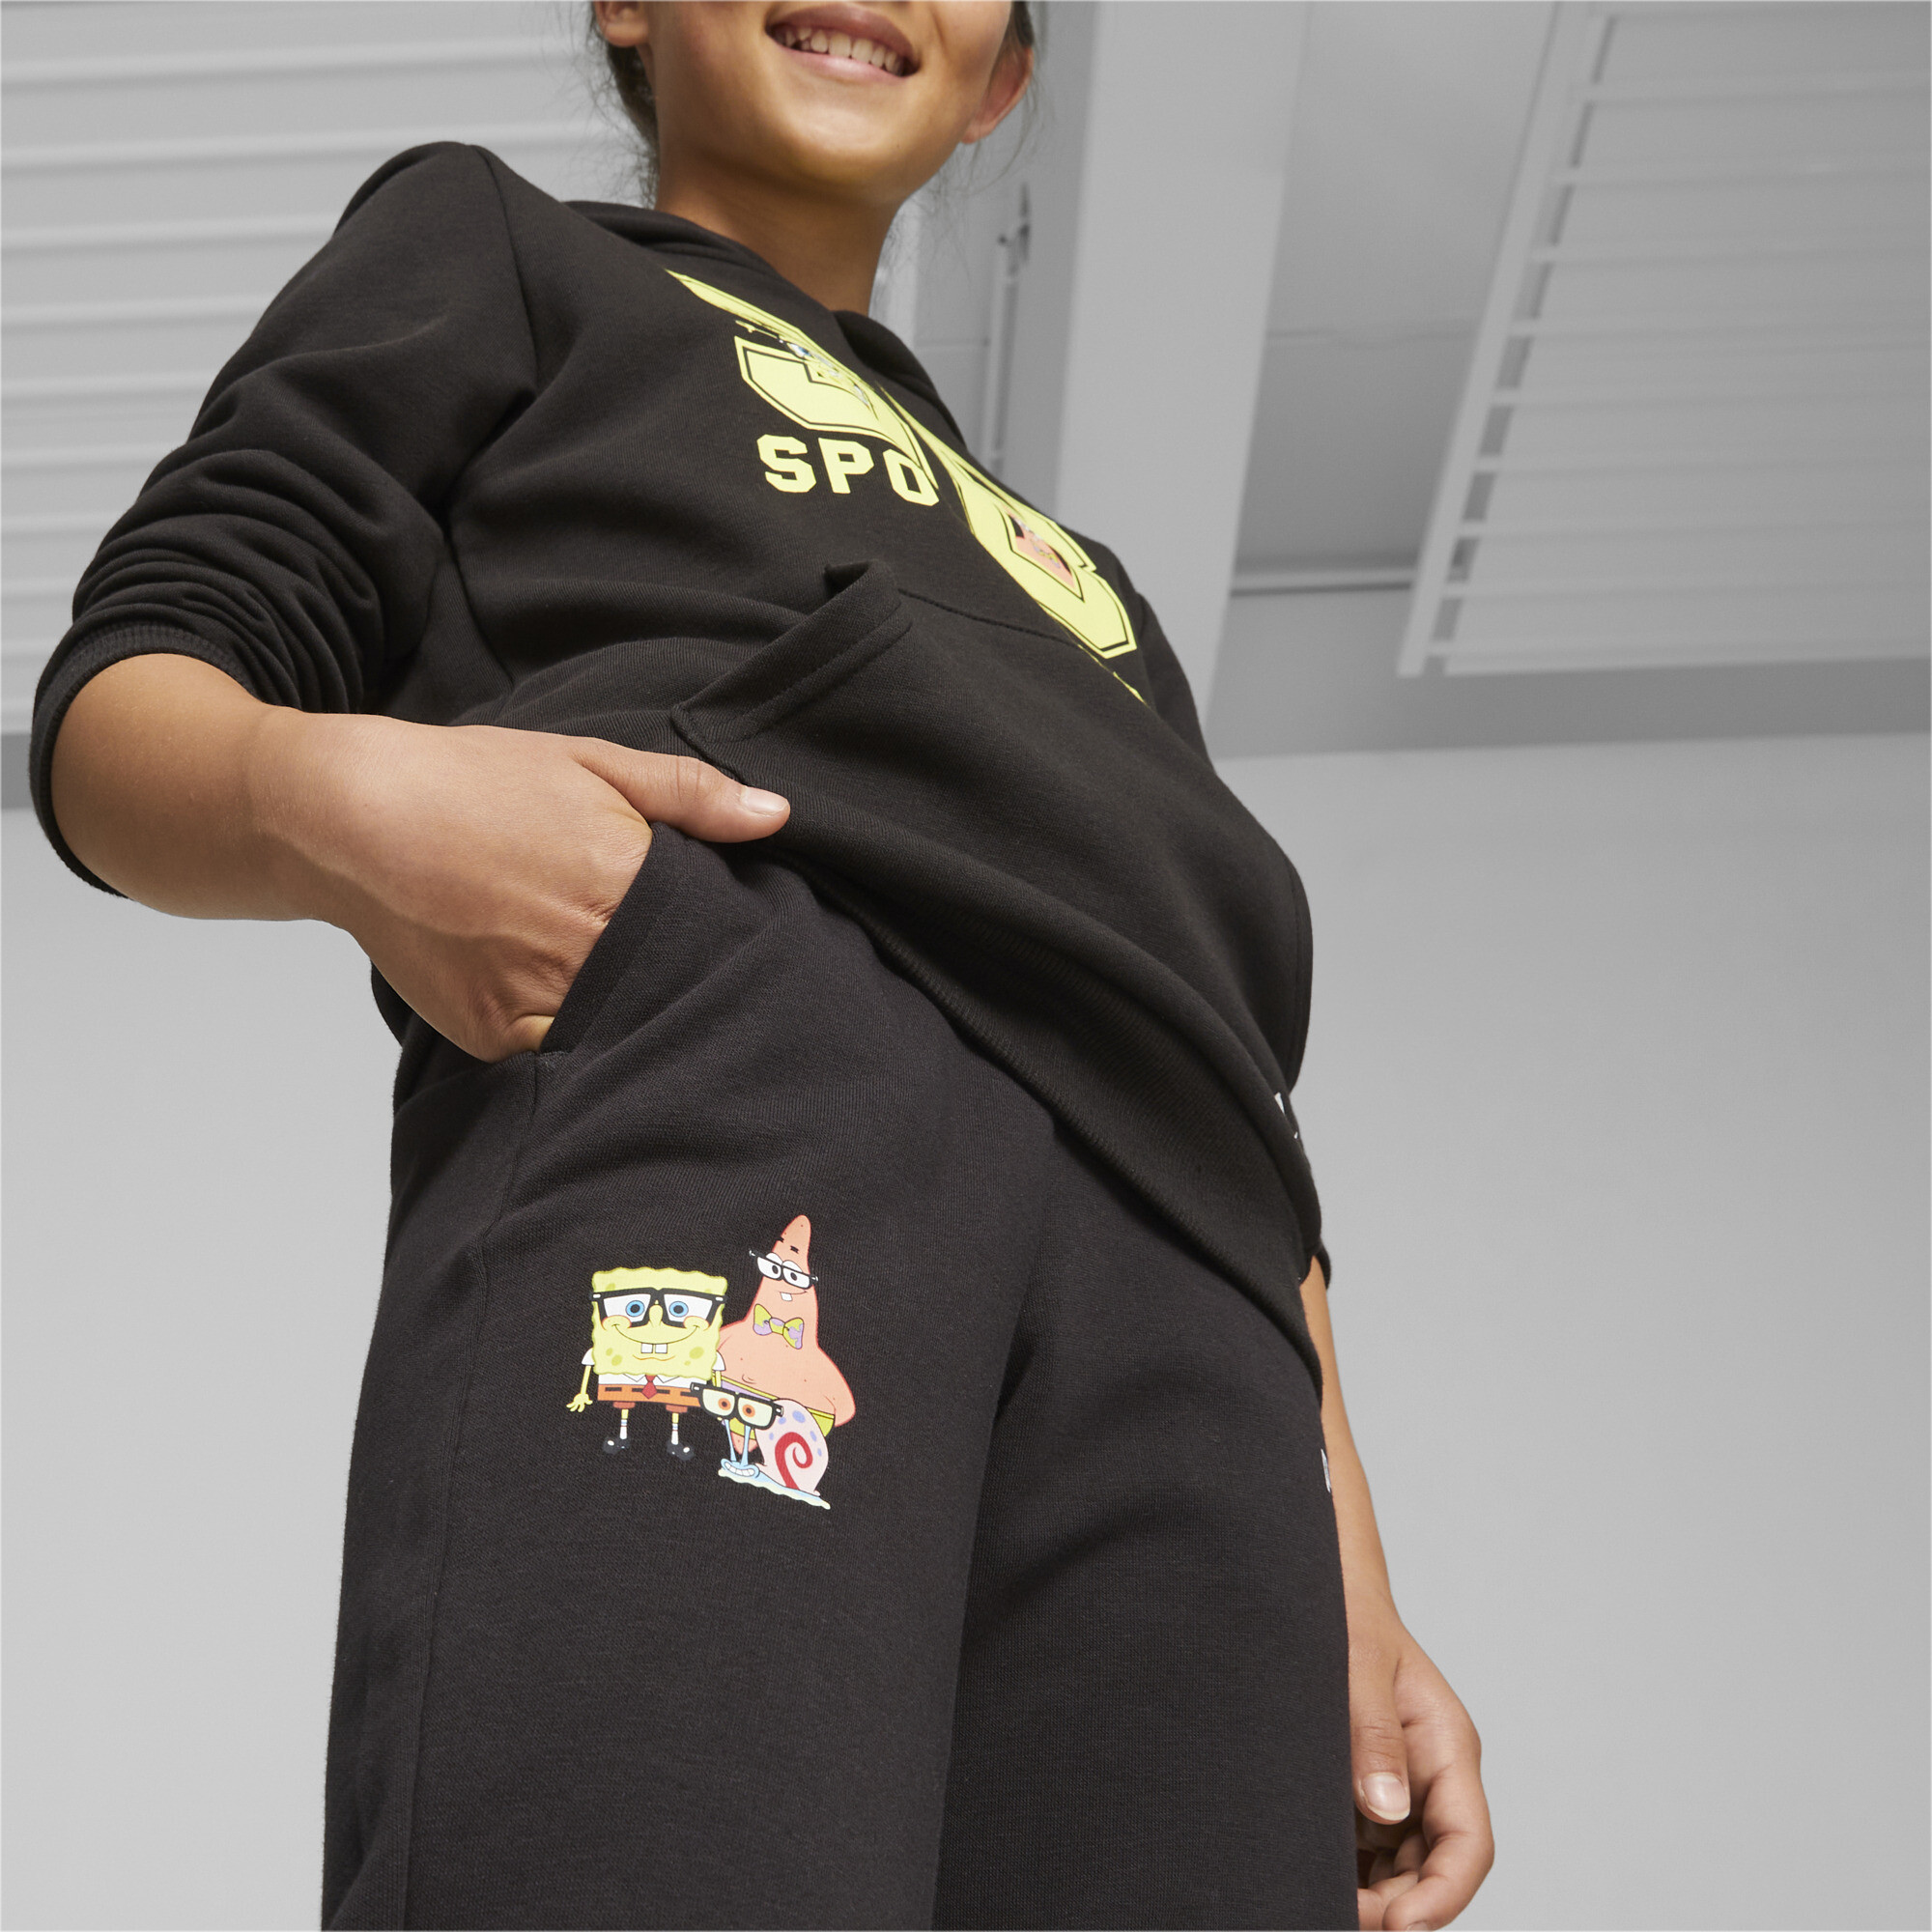 PUMA X SPONGEBOB SQUAREPANTS Sweatpants In Black, Size 7-8 Youth